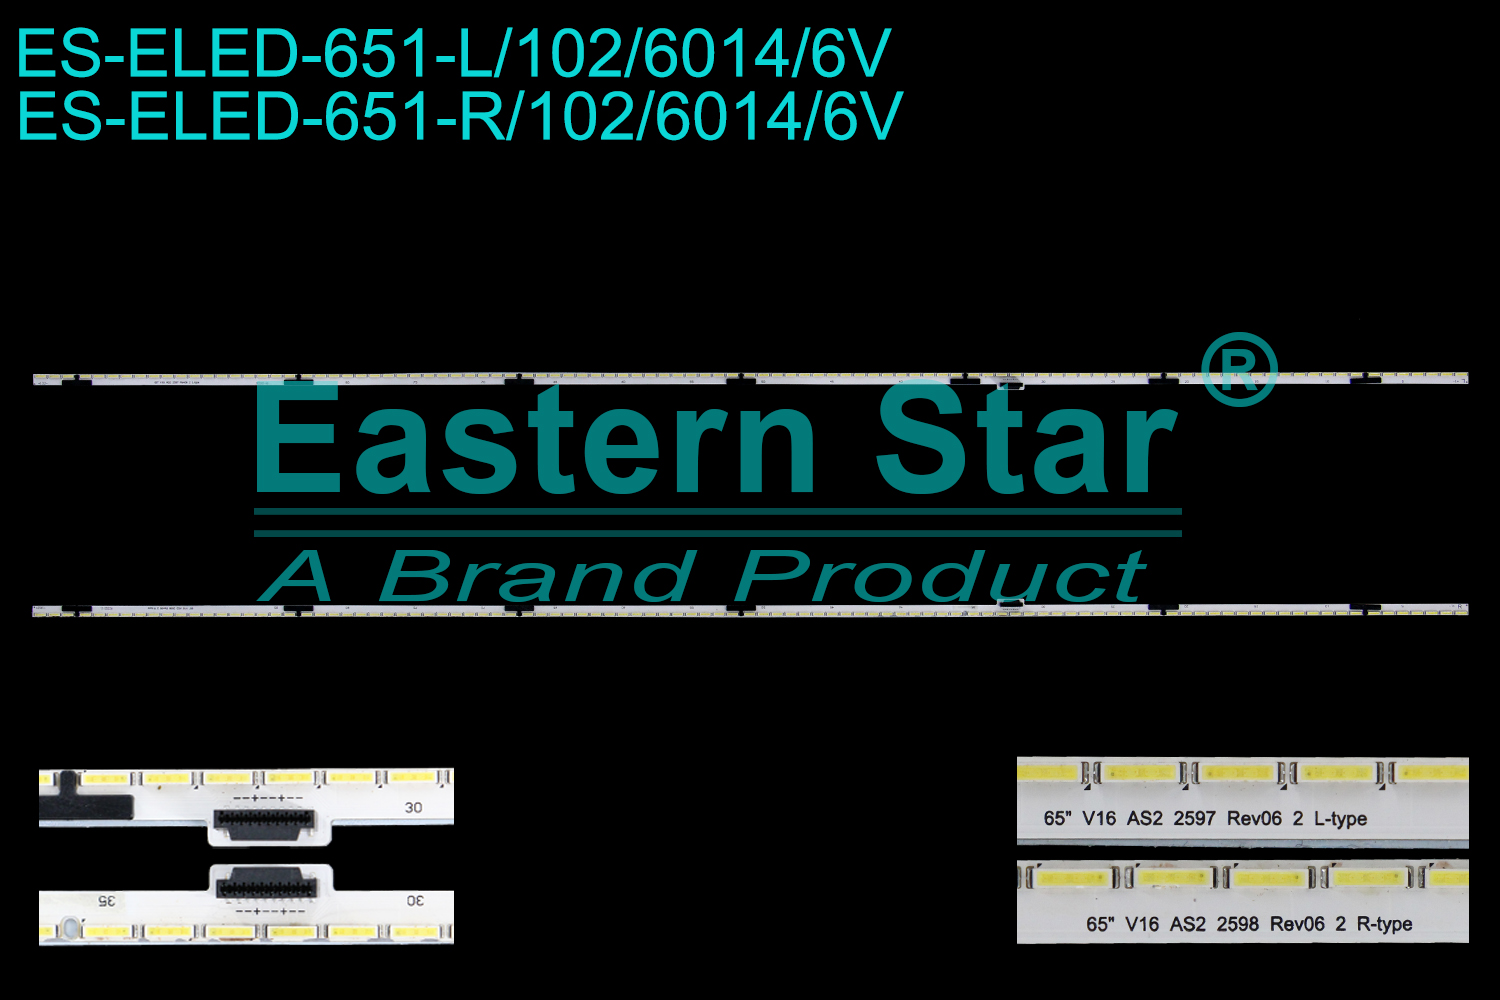 ES-ELED-651 ELED/EDGE TV backlight use for 65'' Lg 65UH950V L: 65" V16 AS2 2597 Rev06 2 L-type, R: 65" V16 AS2 2598 Rev06 2 R-type  LED STRIPS(2)